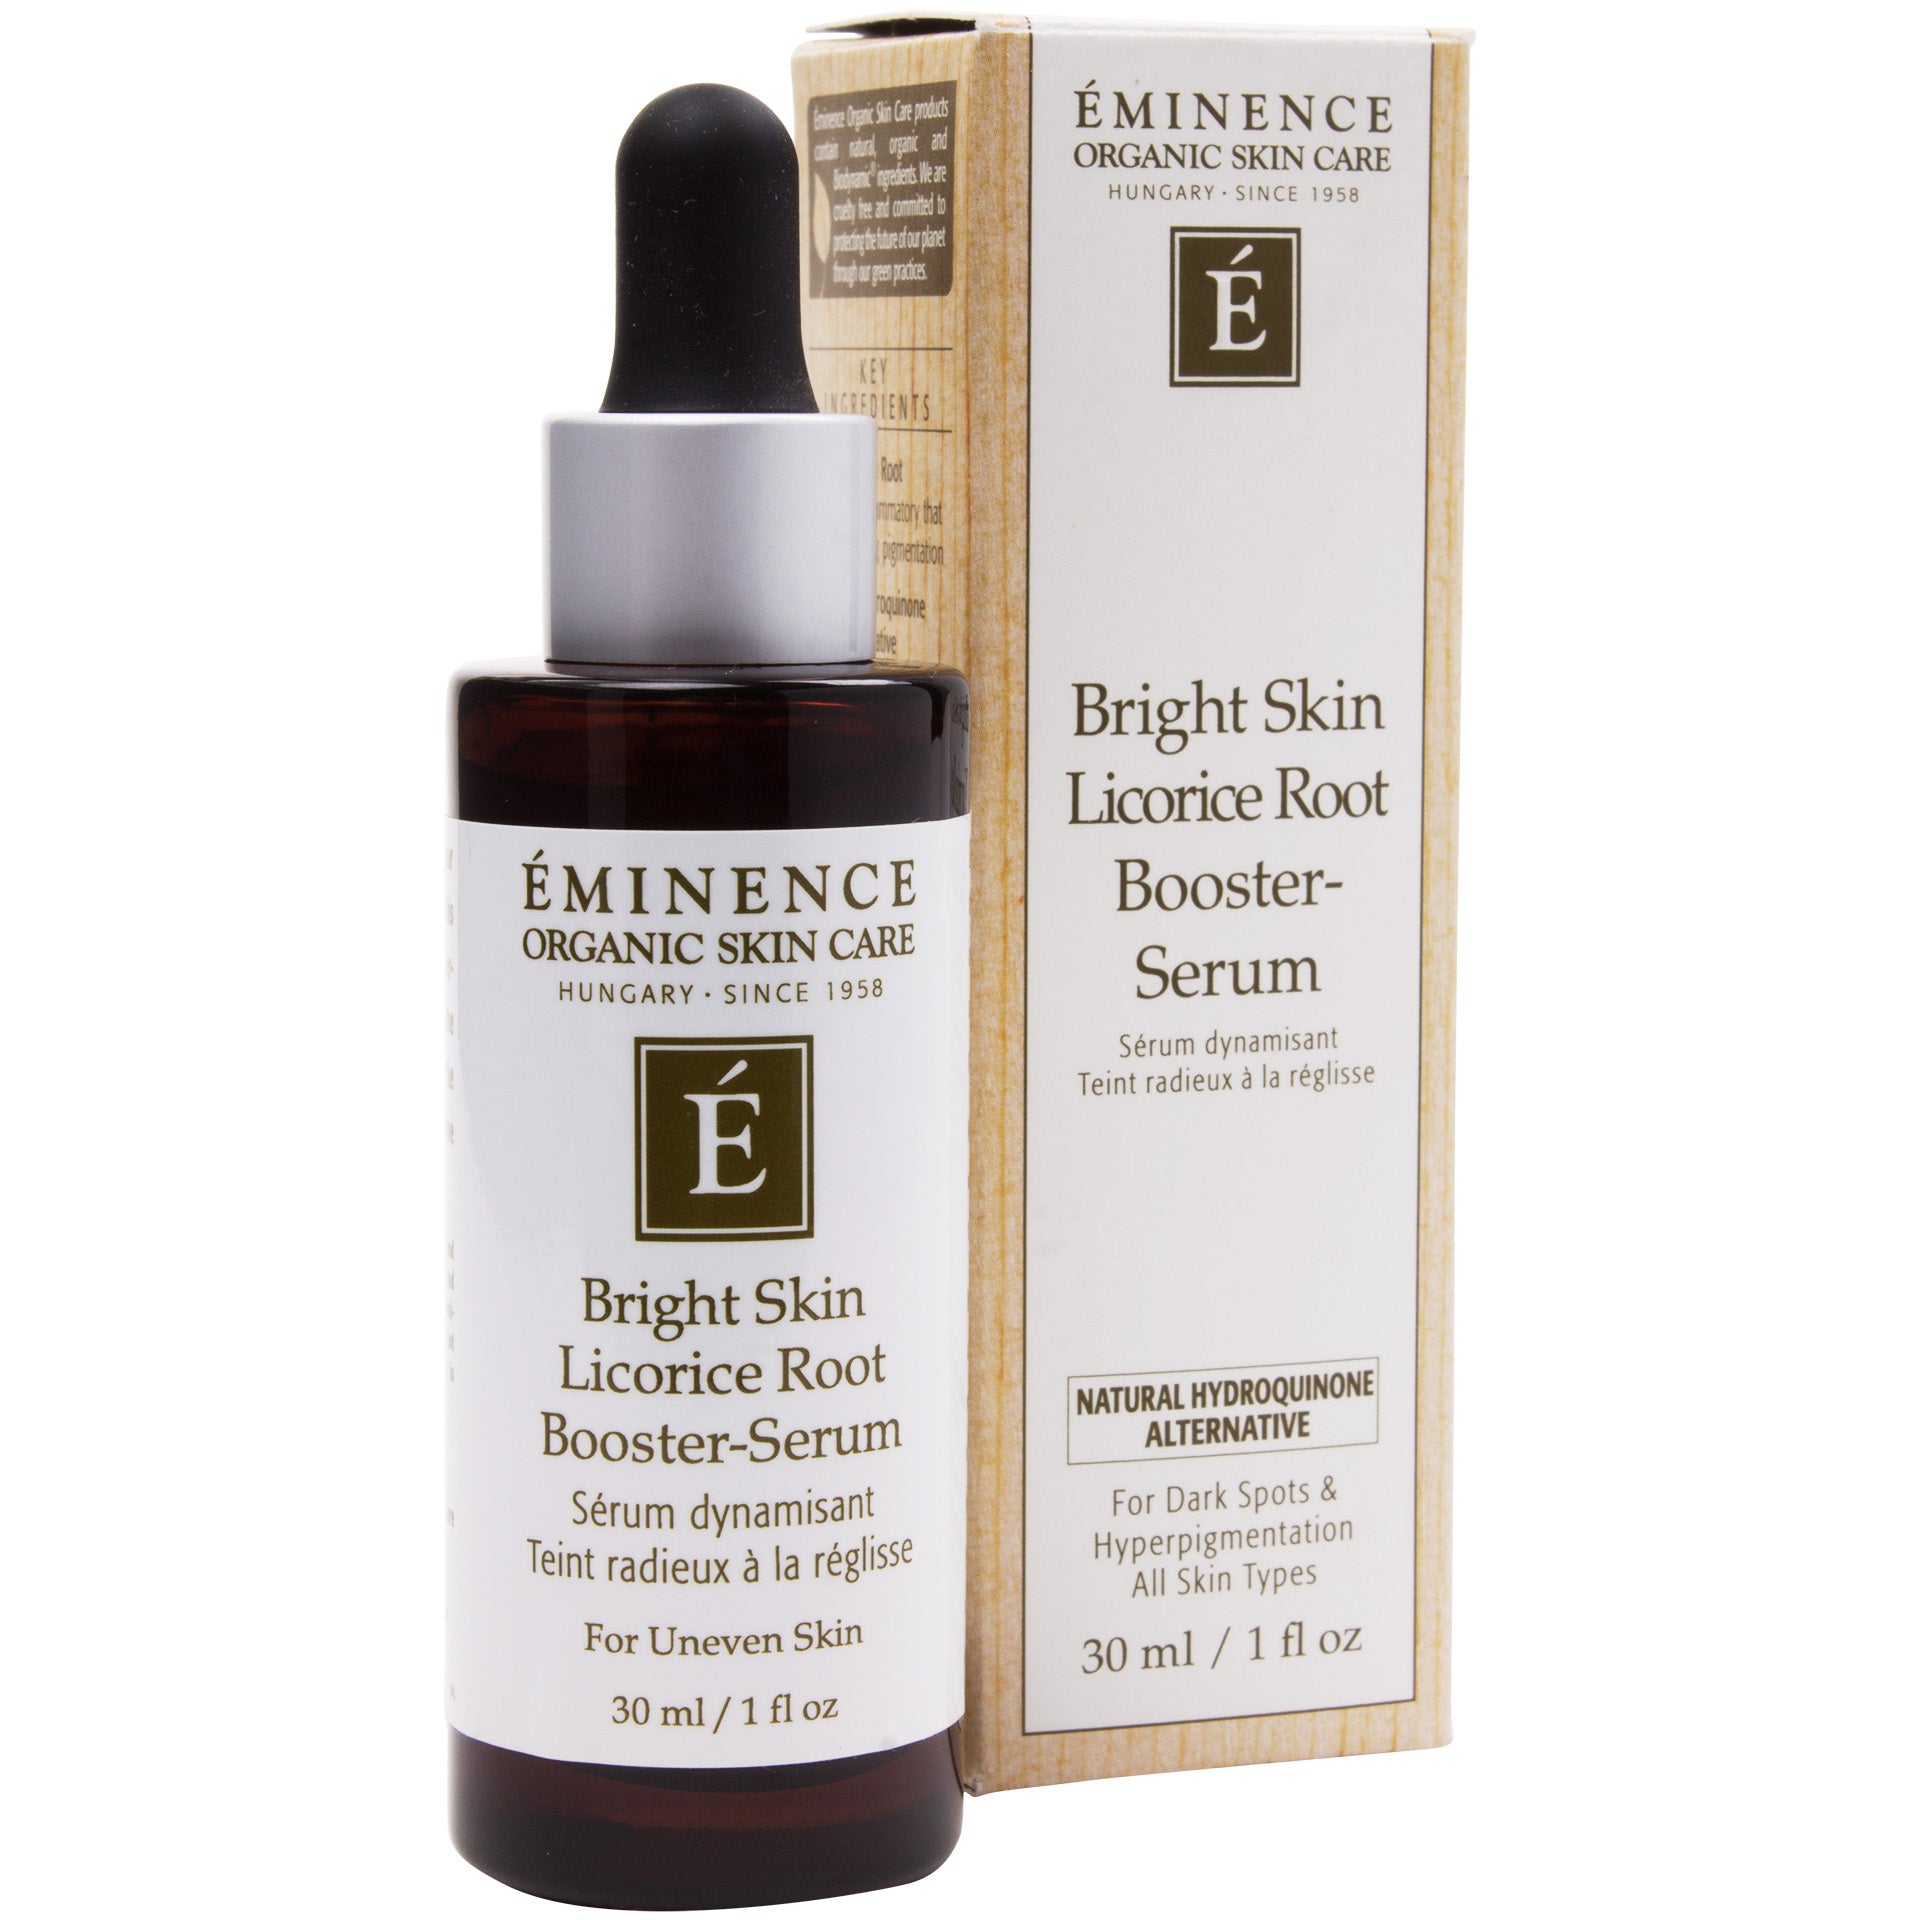 Buy Eminence Bright Skin Licorice Root Booster Serum - 30ml in Pakistan